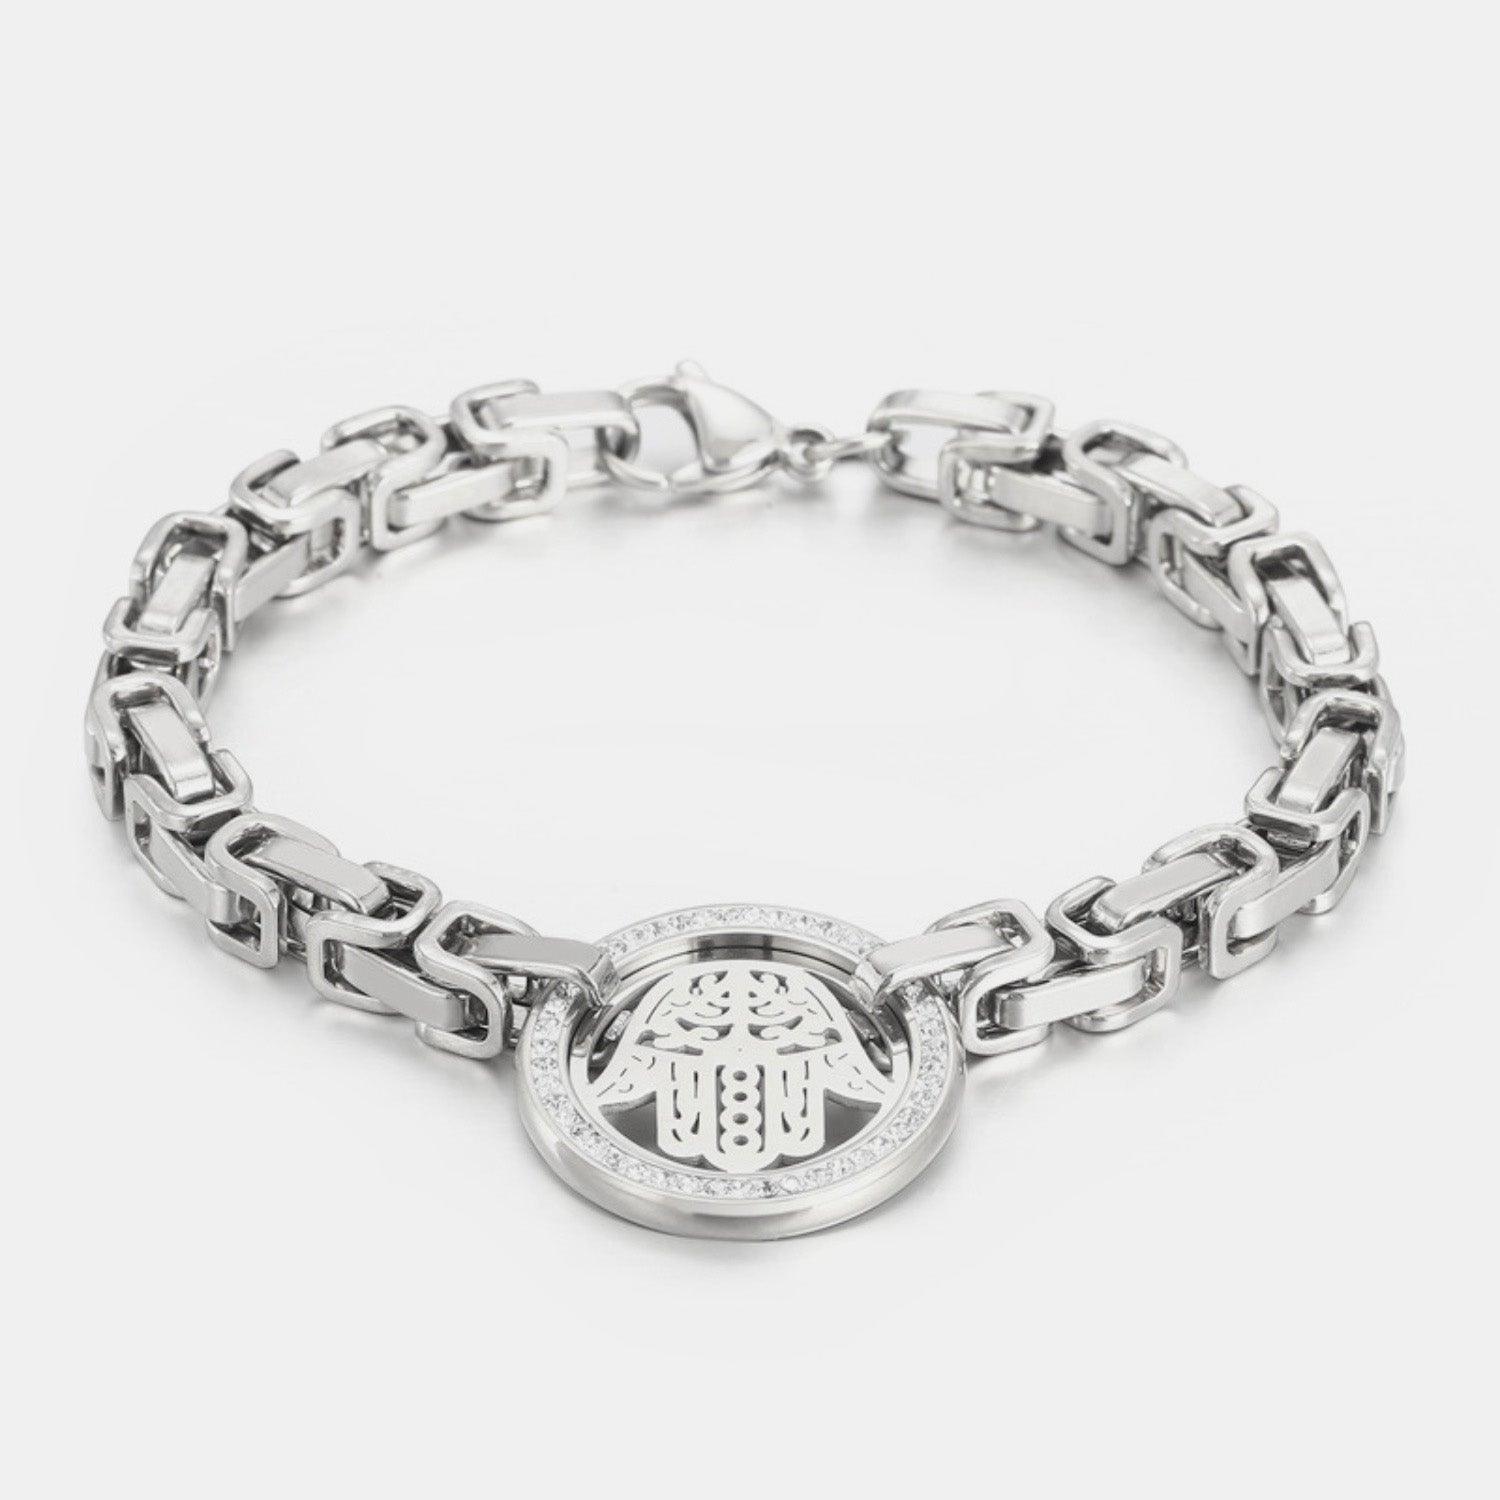 a silver bracelet with an emblem on it